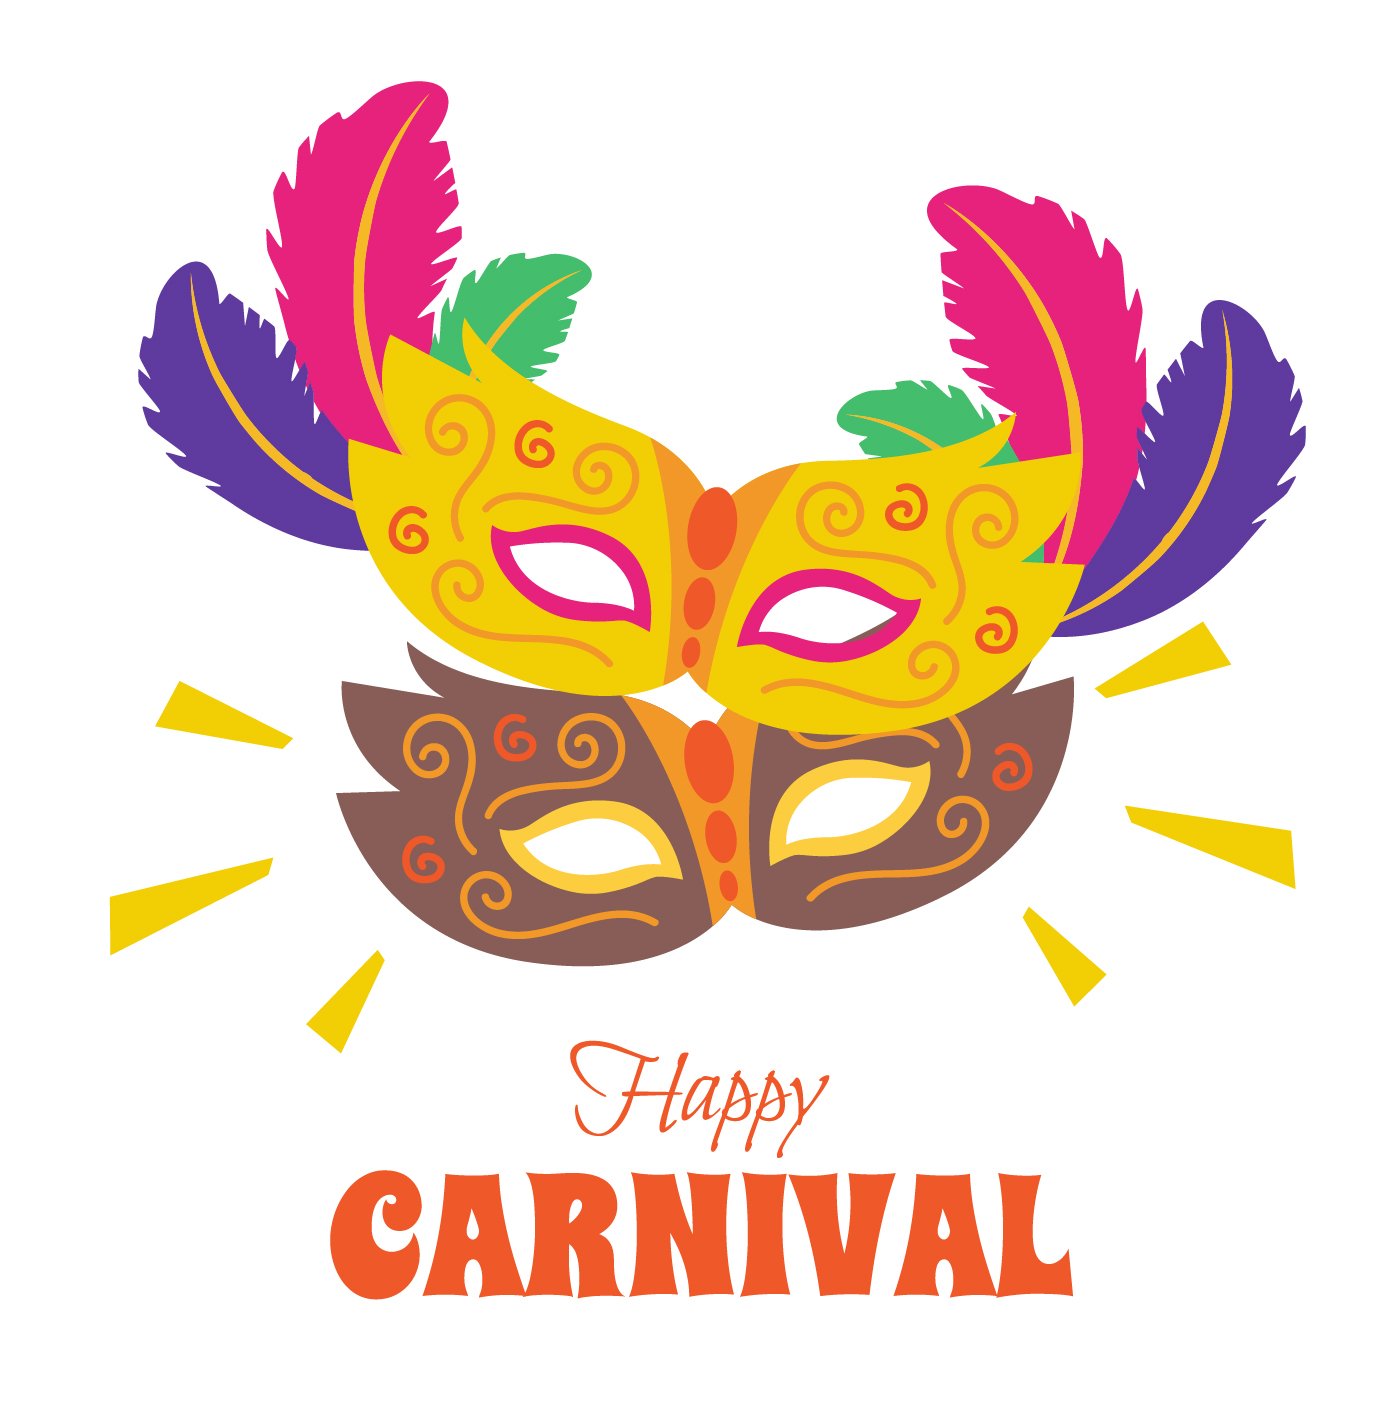 Carnival Festival Illustration